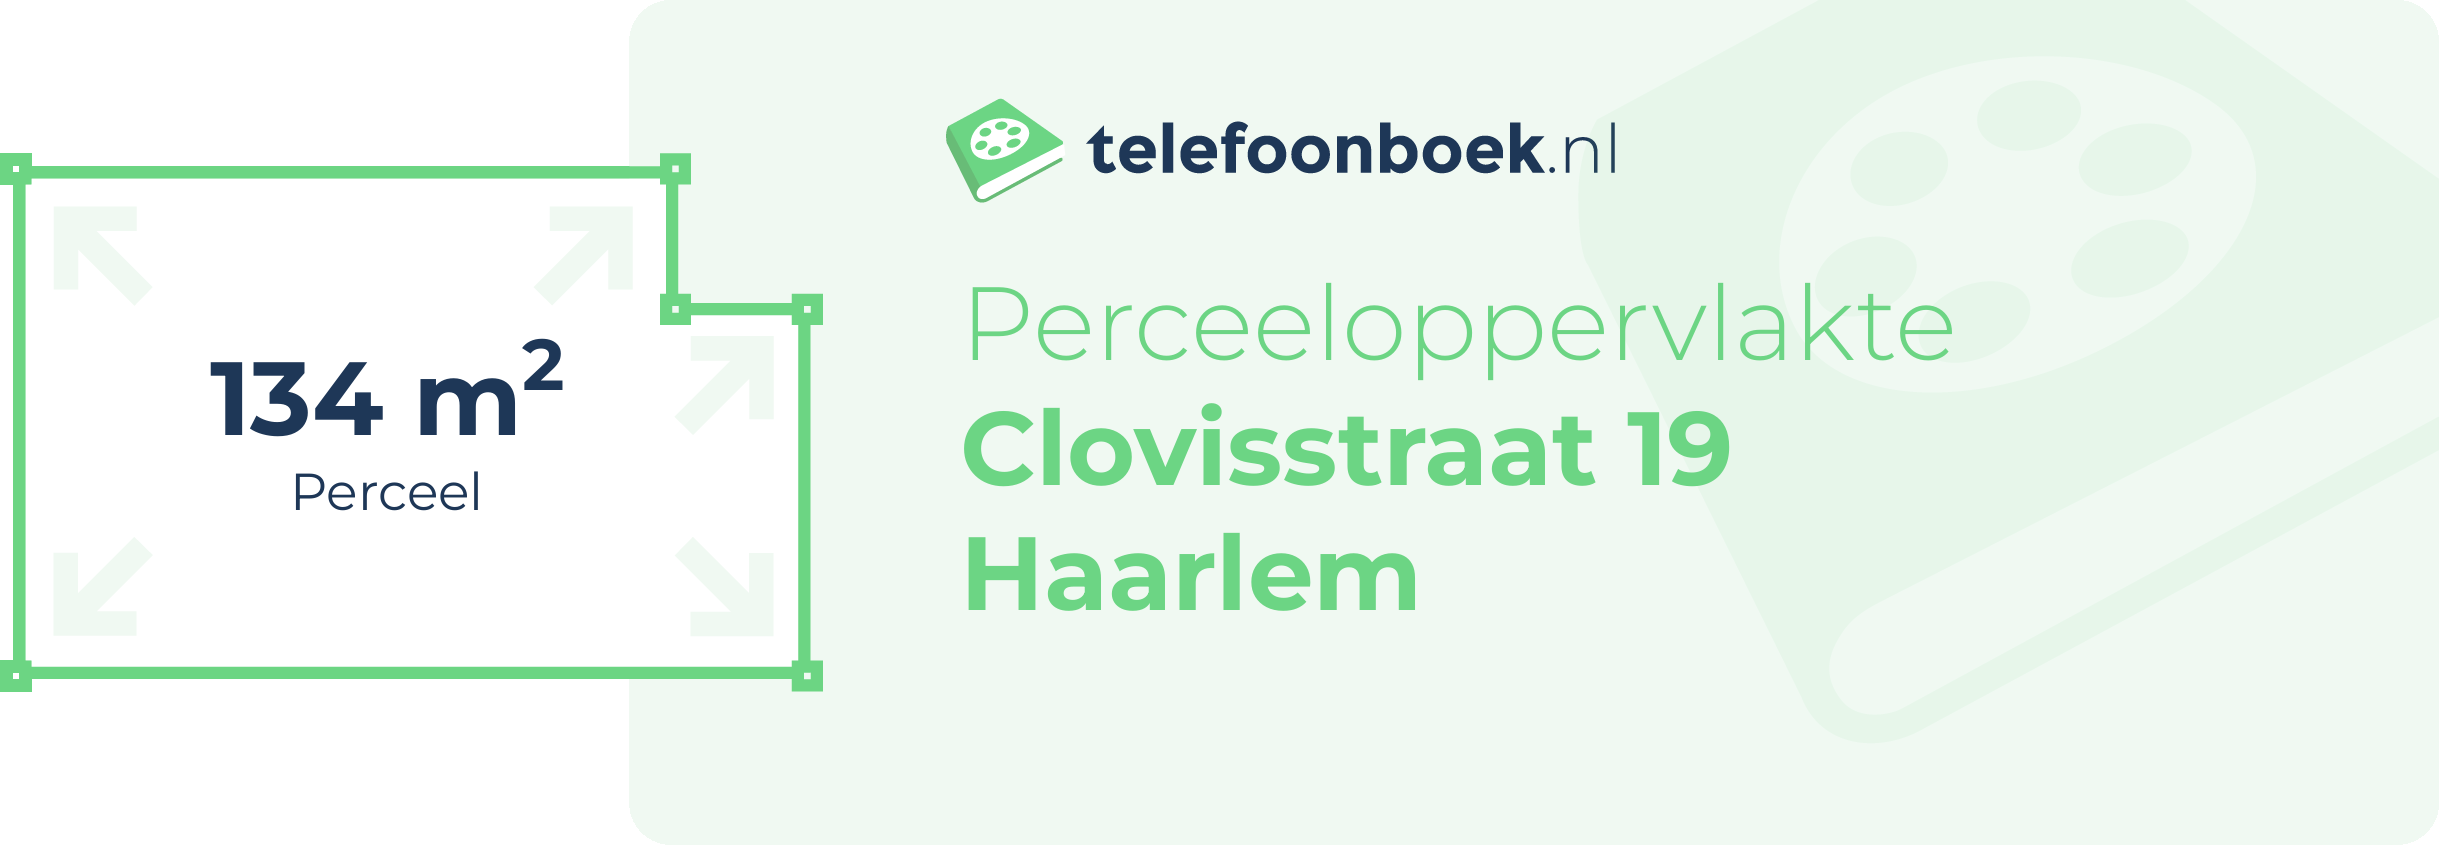 Perceeloppervlakte Clovisstraat 19 Haarlem